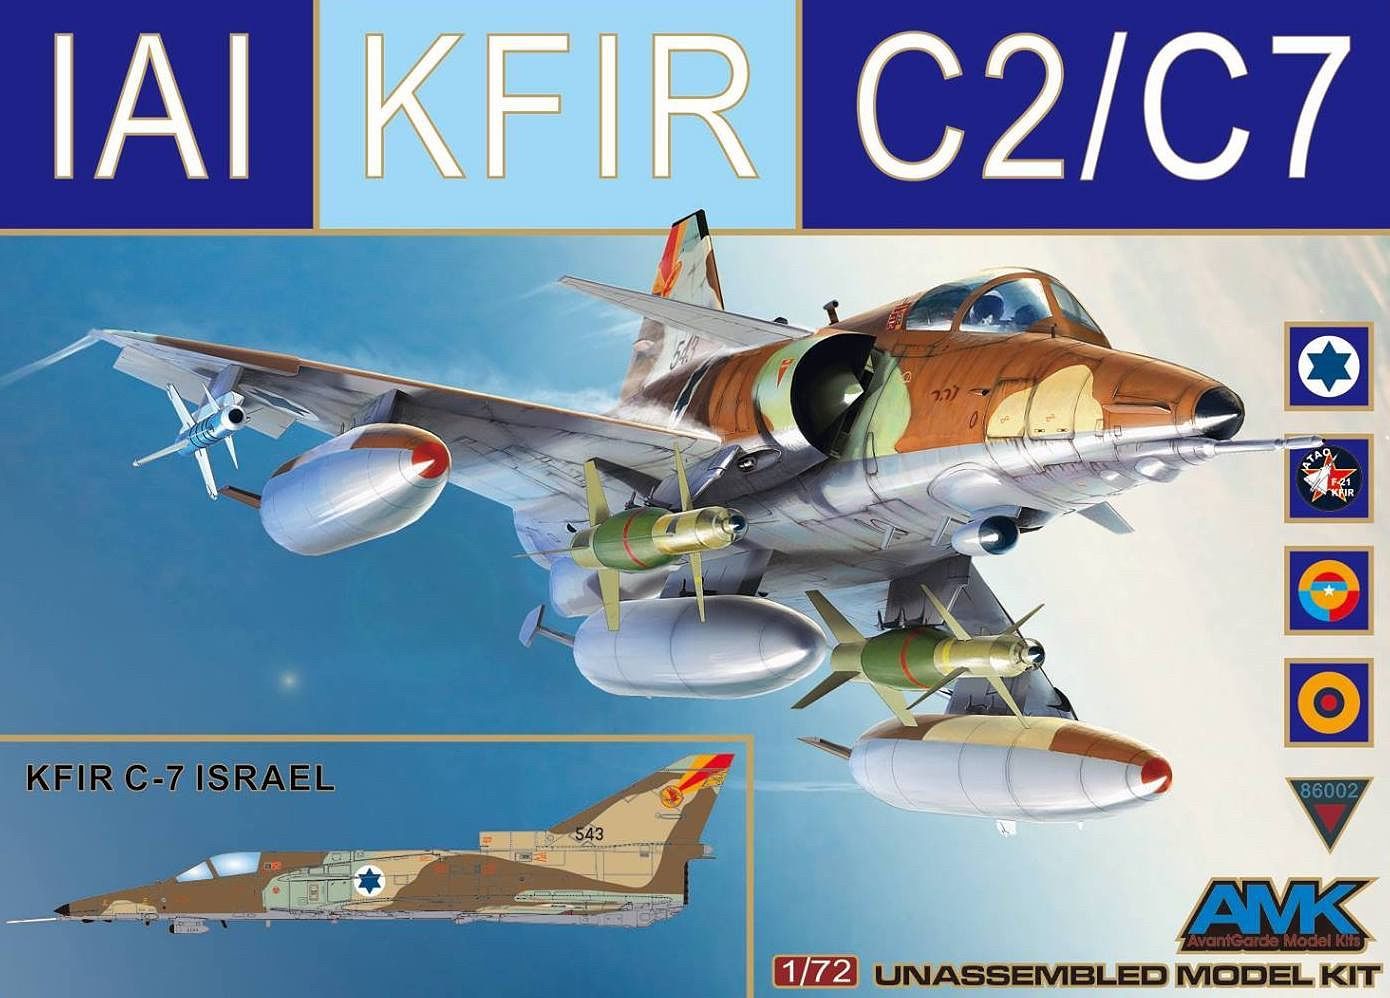 Plastikový model letadla 1/72 IAI KFIR C2/C7 - AMK